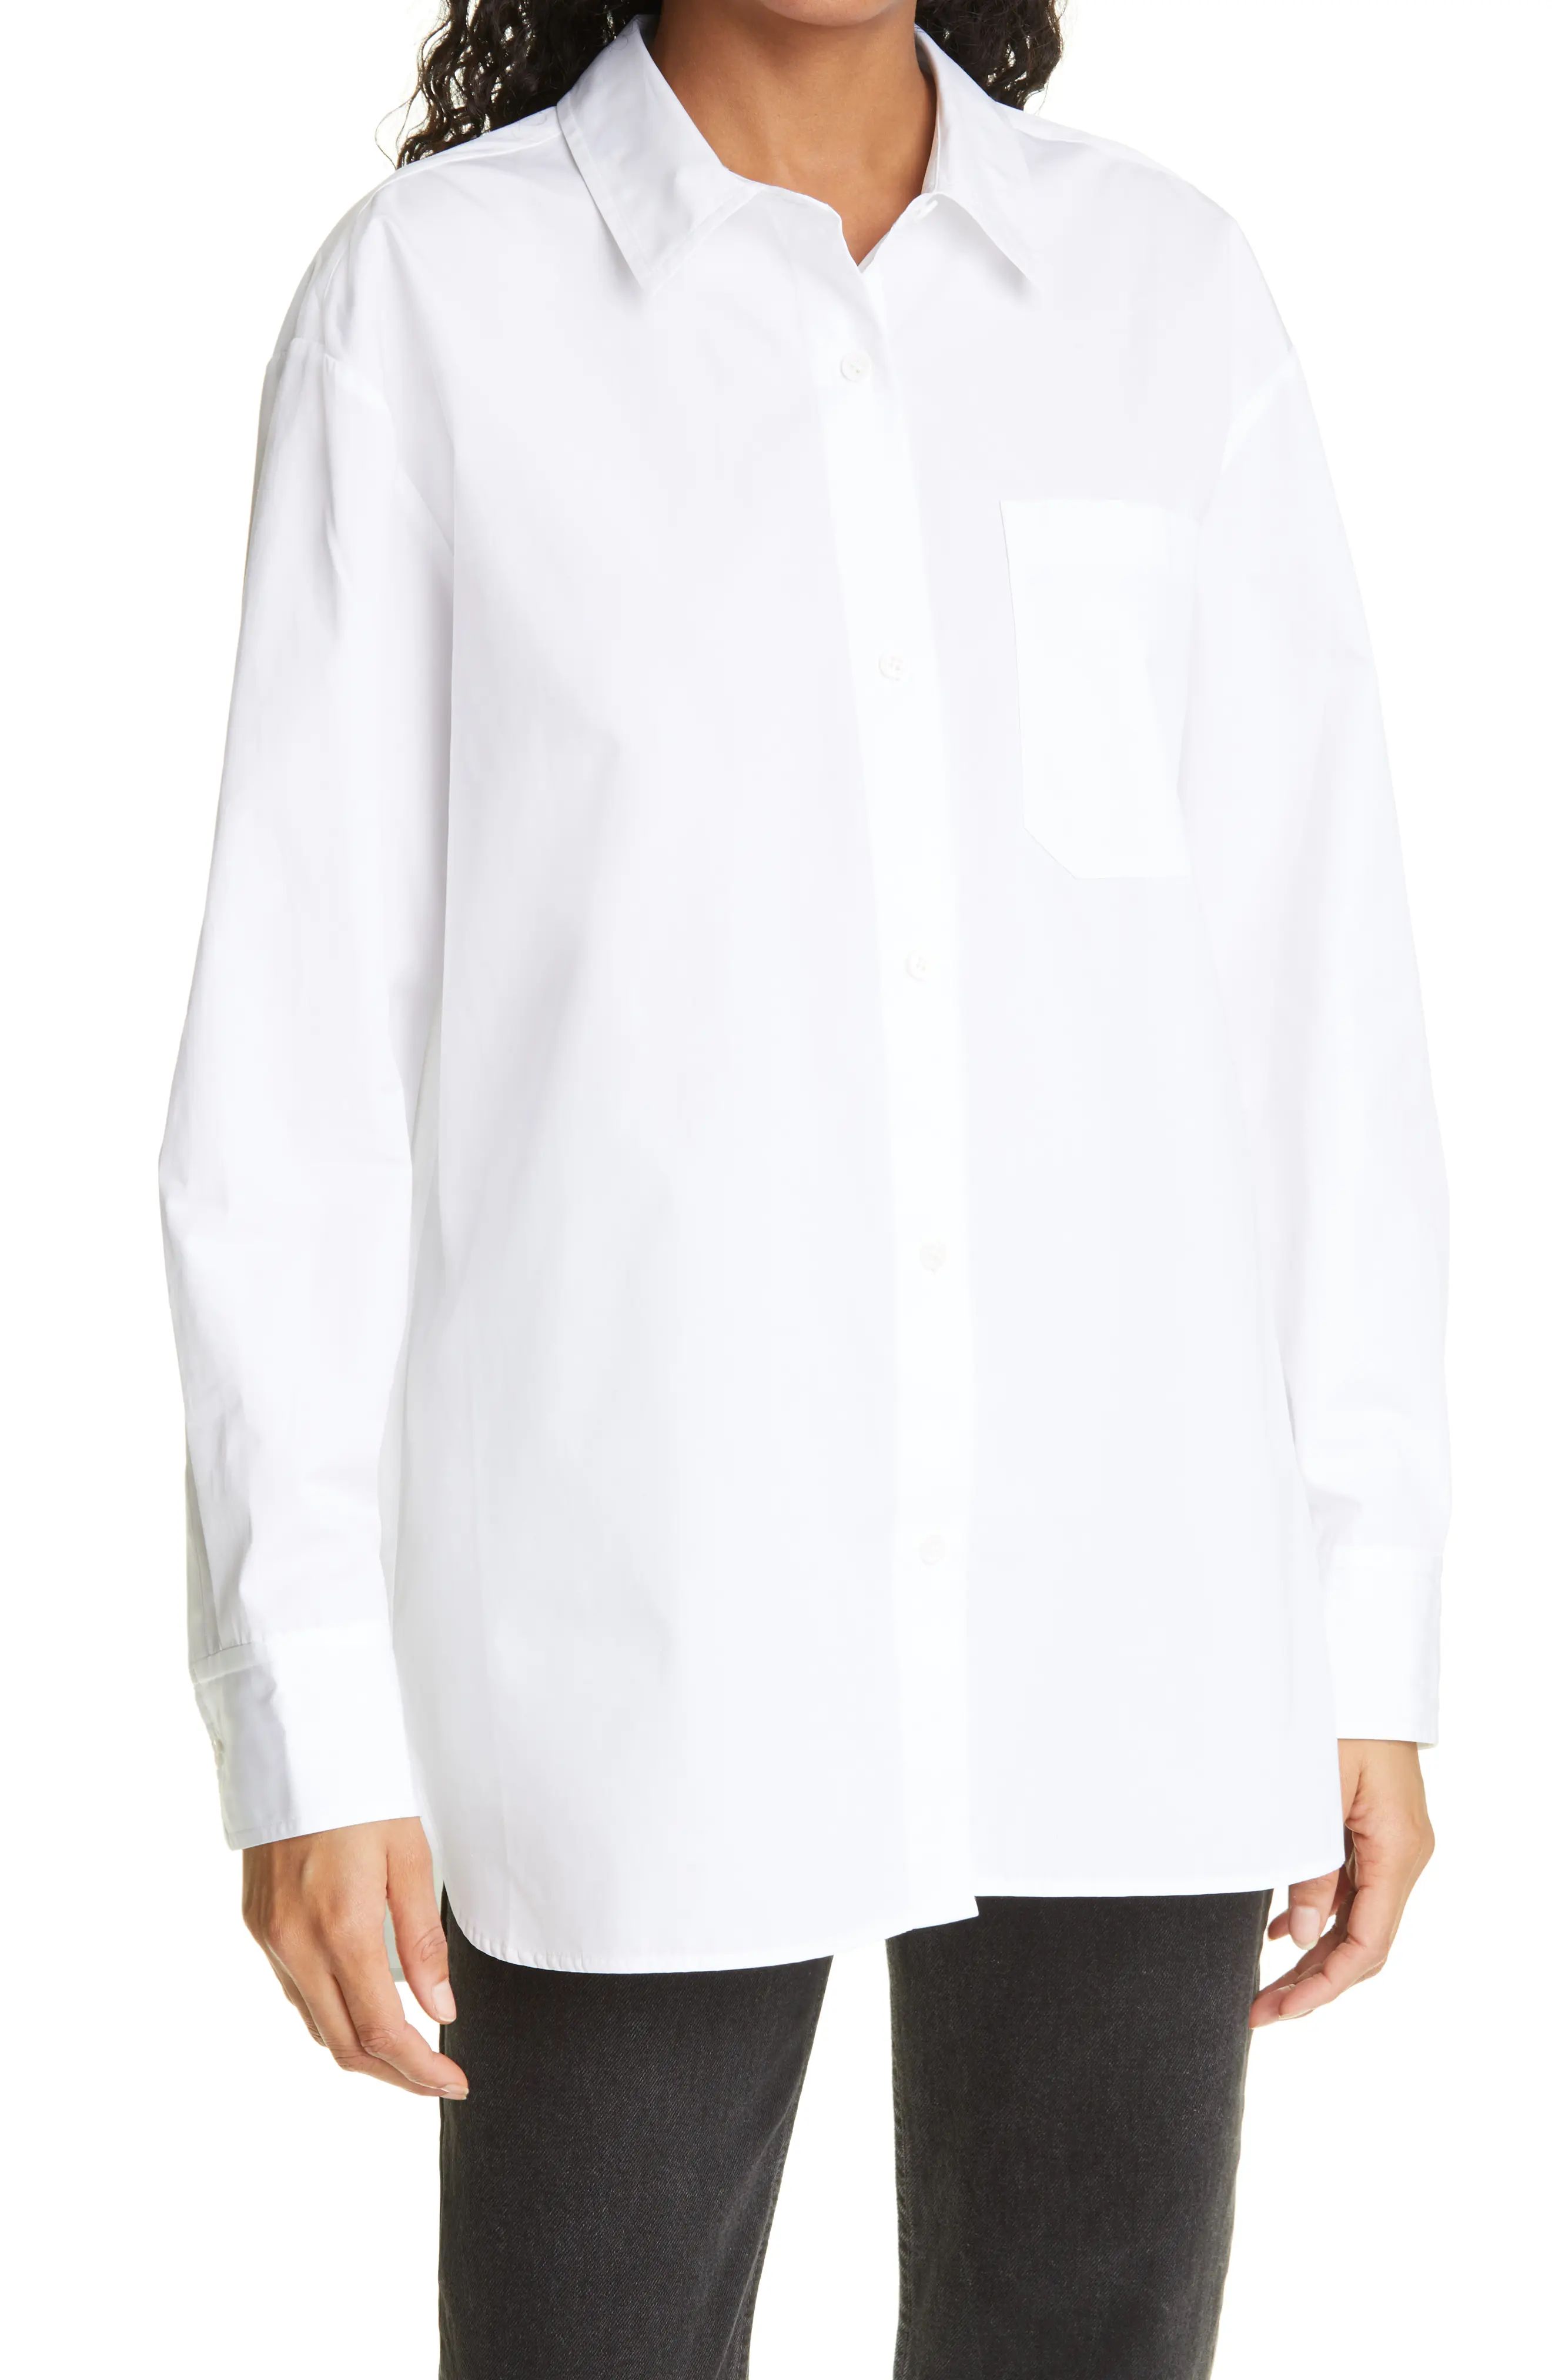 Jenni Kayne Boyfriend Shirt, Size X-Small in White at Nordstrom | Nordstrom